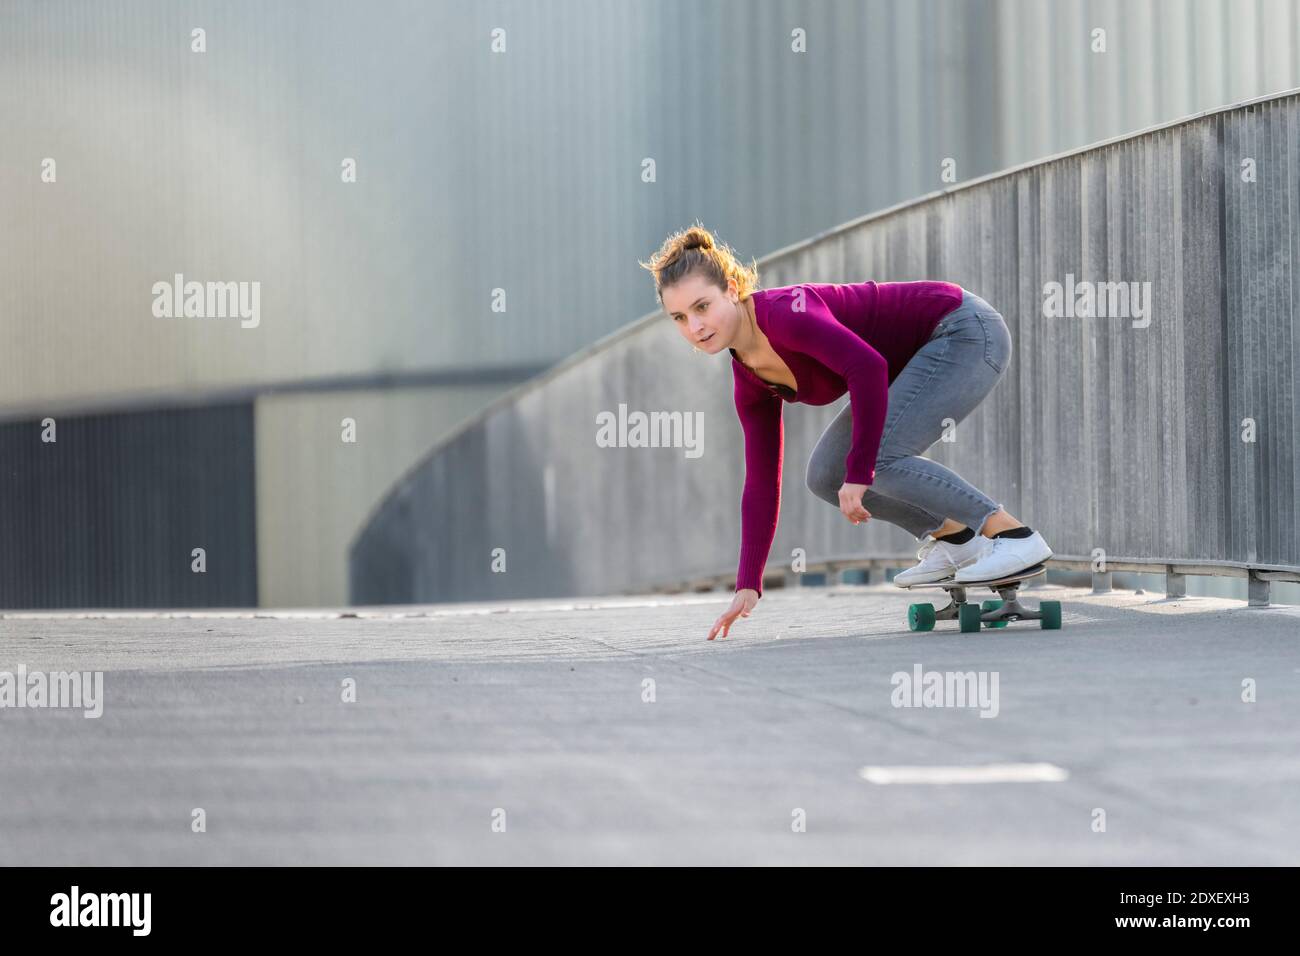 Junge Frau Skateboarding auf Fußgängerbrücke Stockfoto